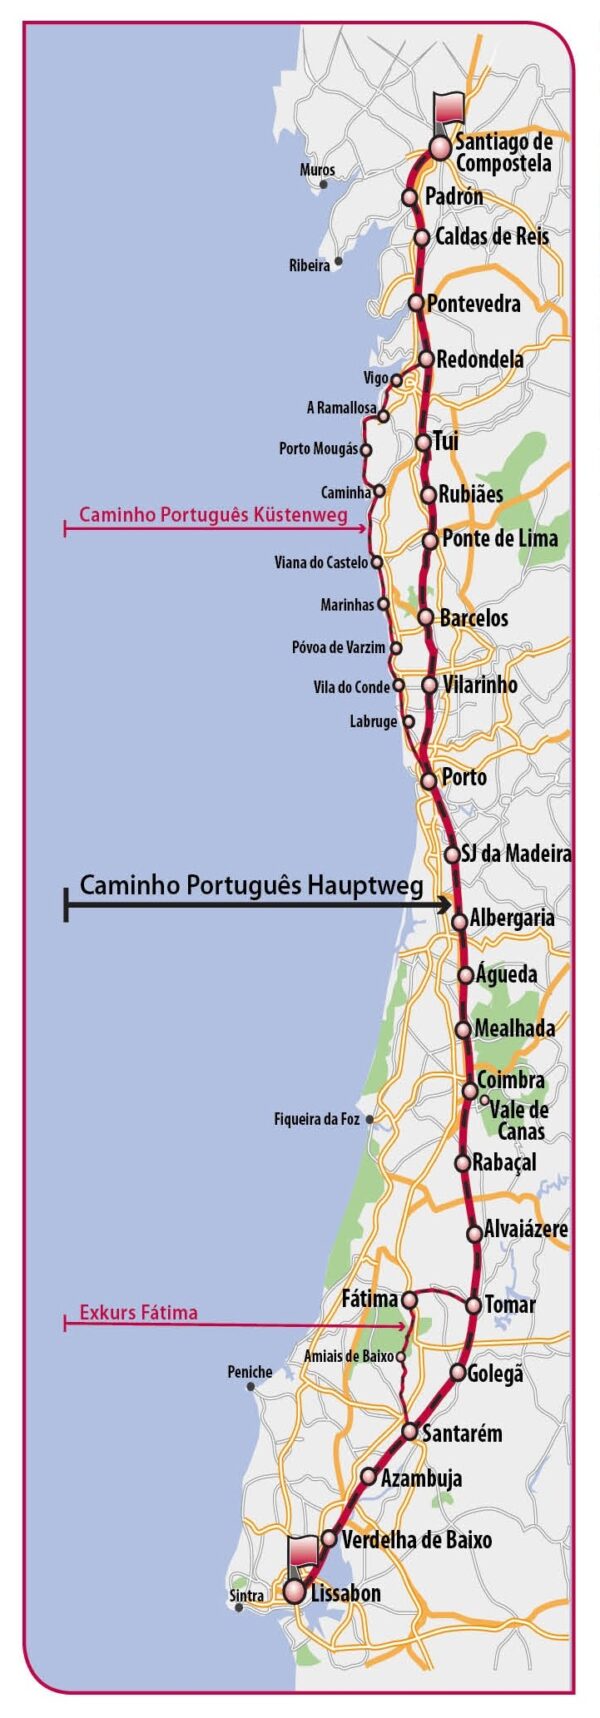 Caminho Português | Camino Portugués | Kathrin Hützen 9783906189307 Kathrin Hützen Kathrin Hützen   Wandelgidsen Noord en Midden-Portugal, Porto, Santiago de Compostela, de Spaanse routes